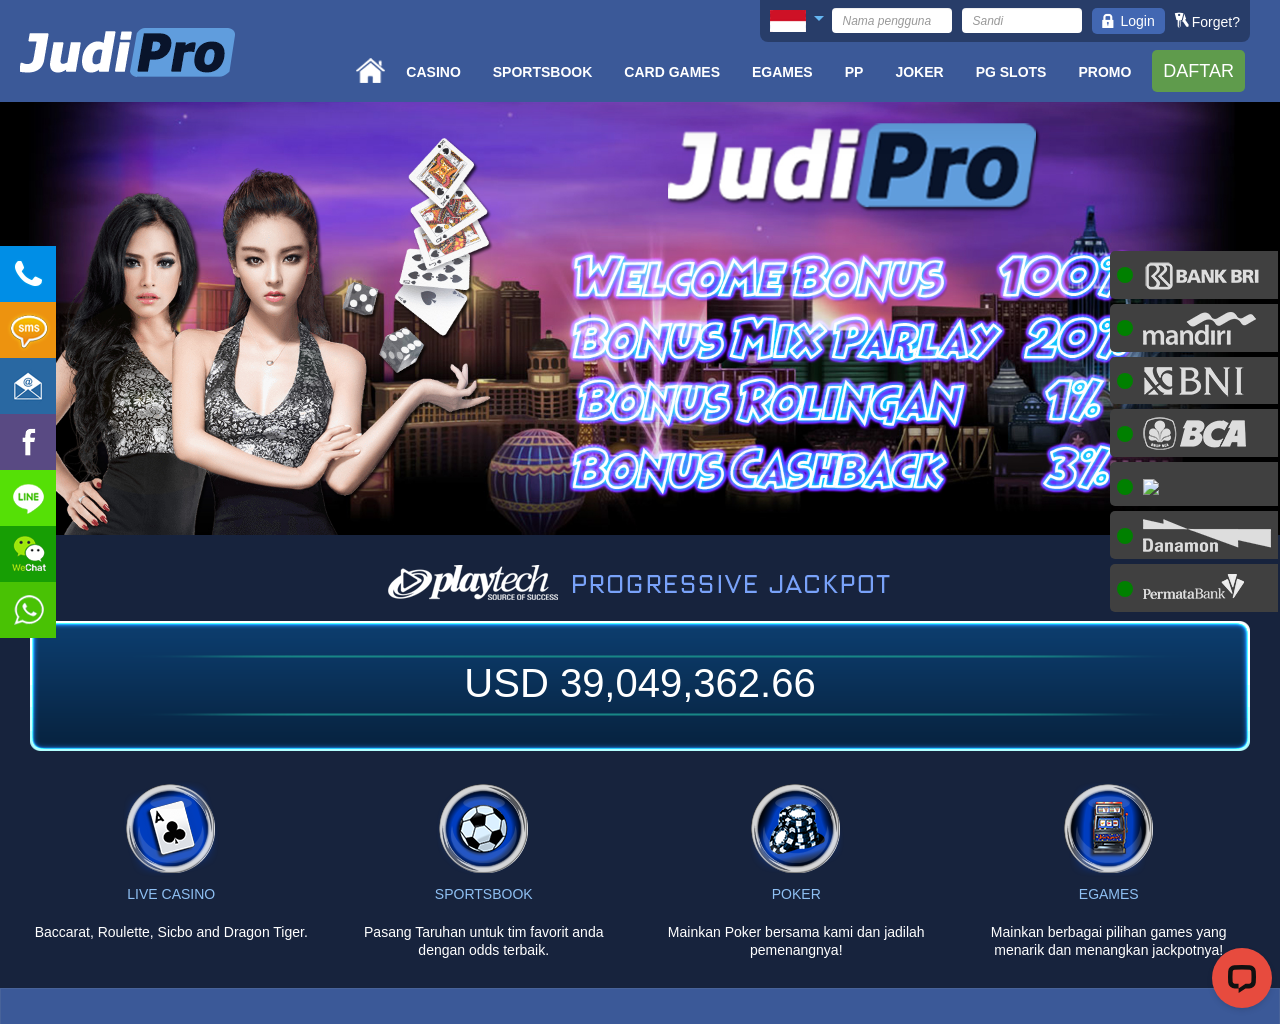 judipro.com